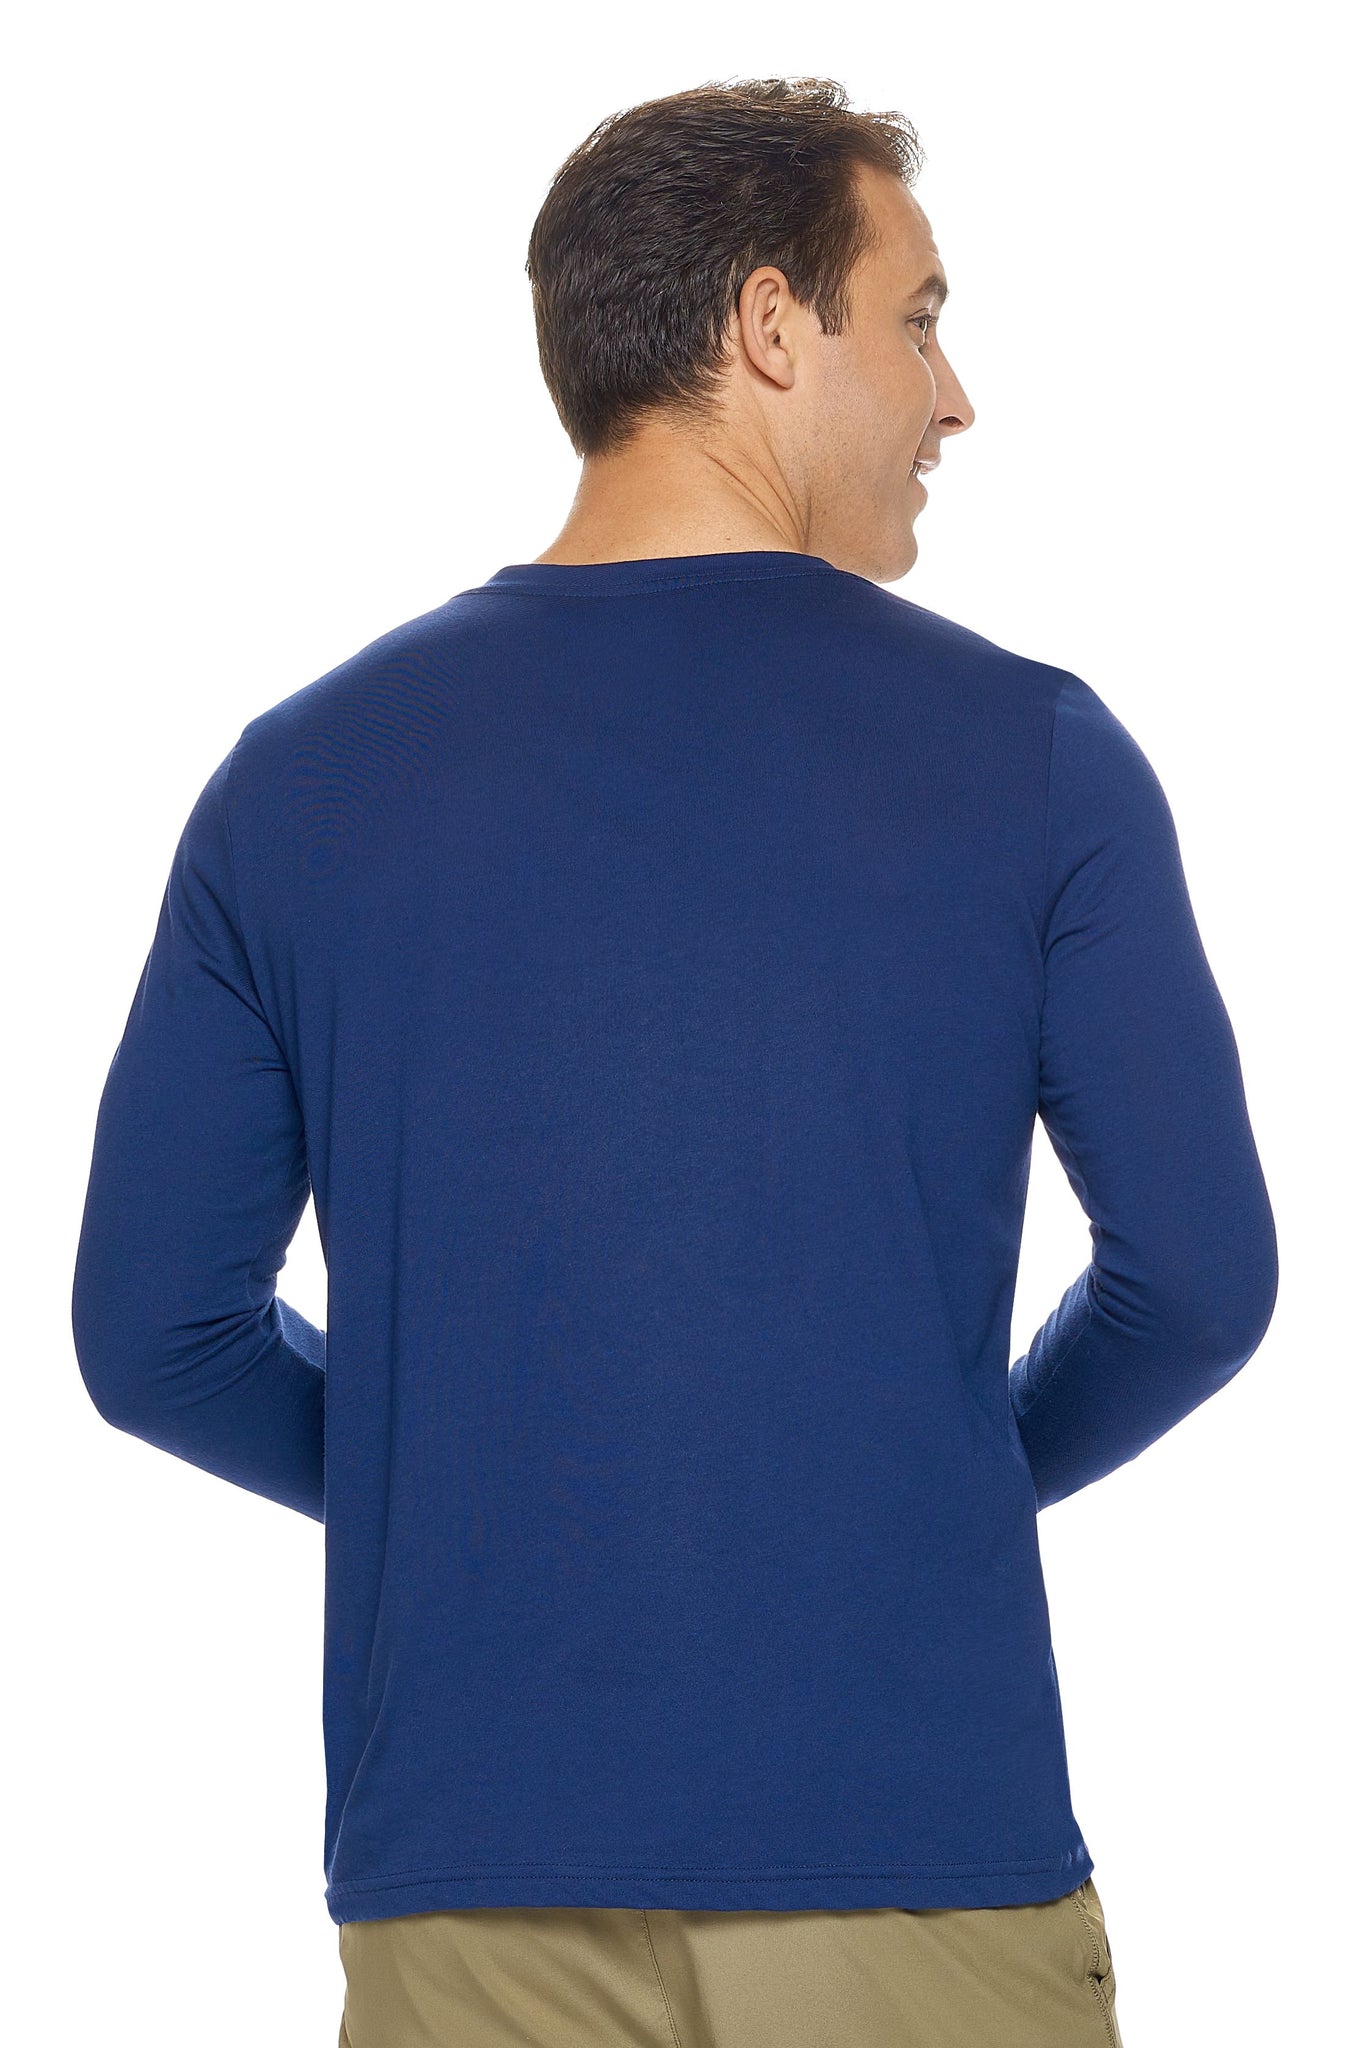 Expert Brand Wholesale Men's MoCA™ V-Neck Long Sleeve Tee in Navy Image 3#navy